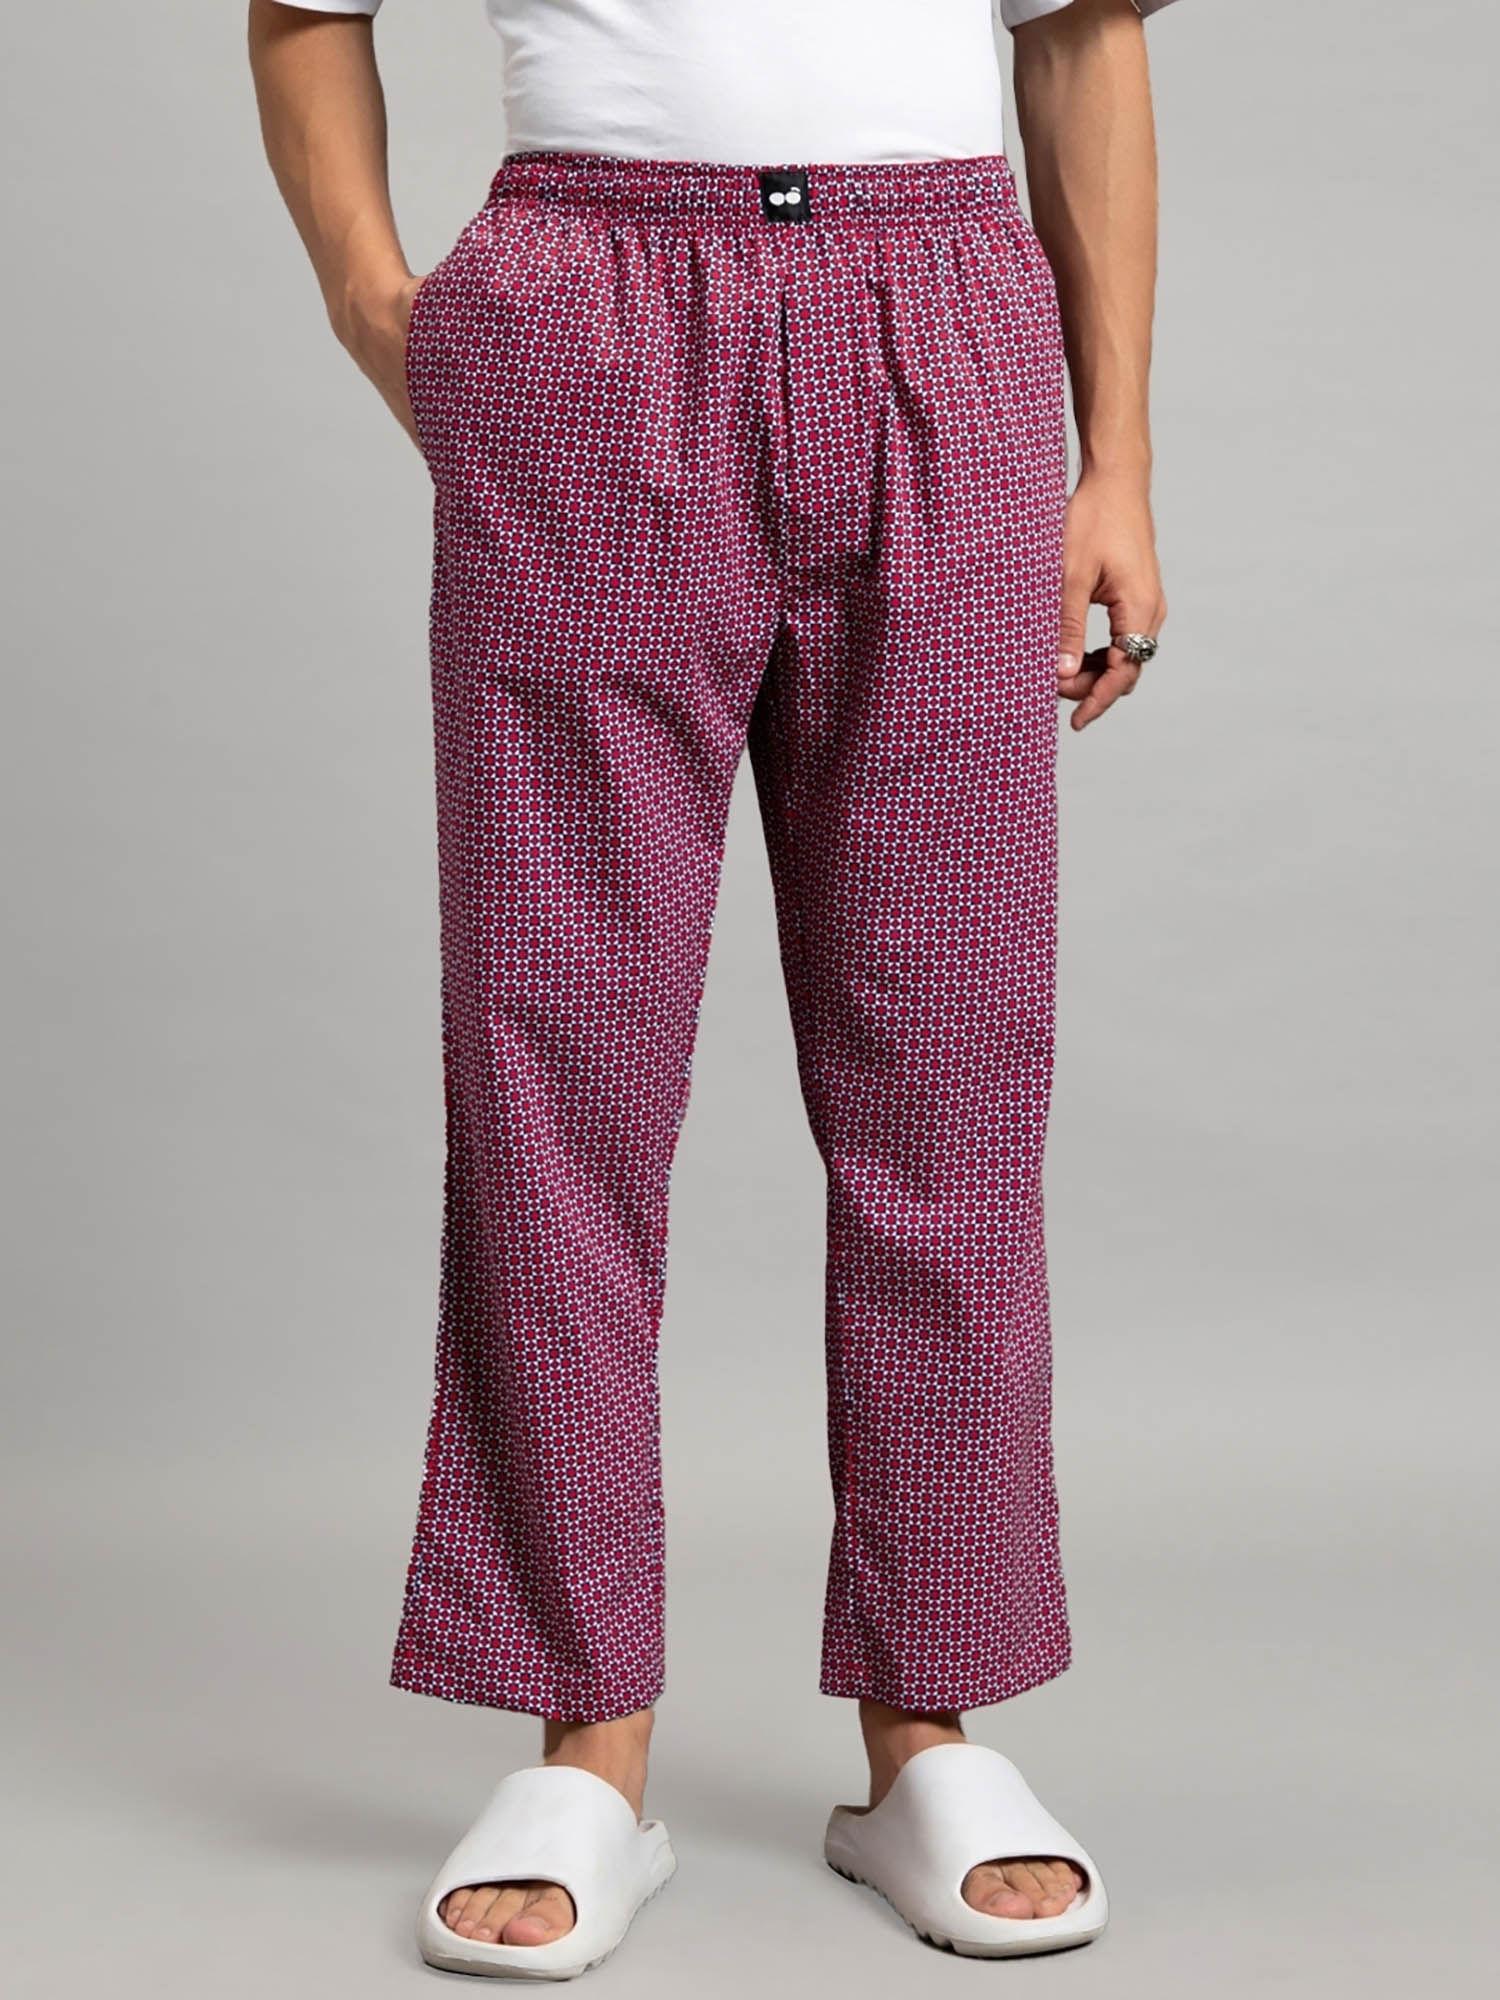 men's-pink-all-over-printed-pyjamas